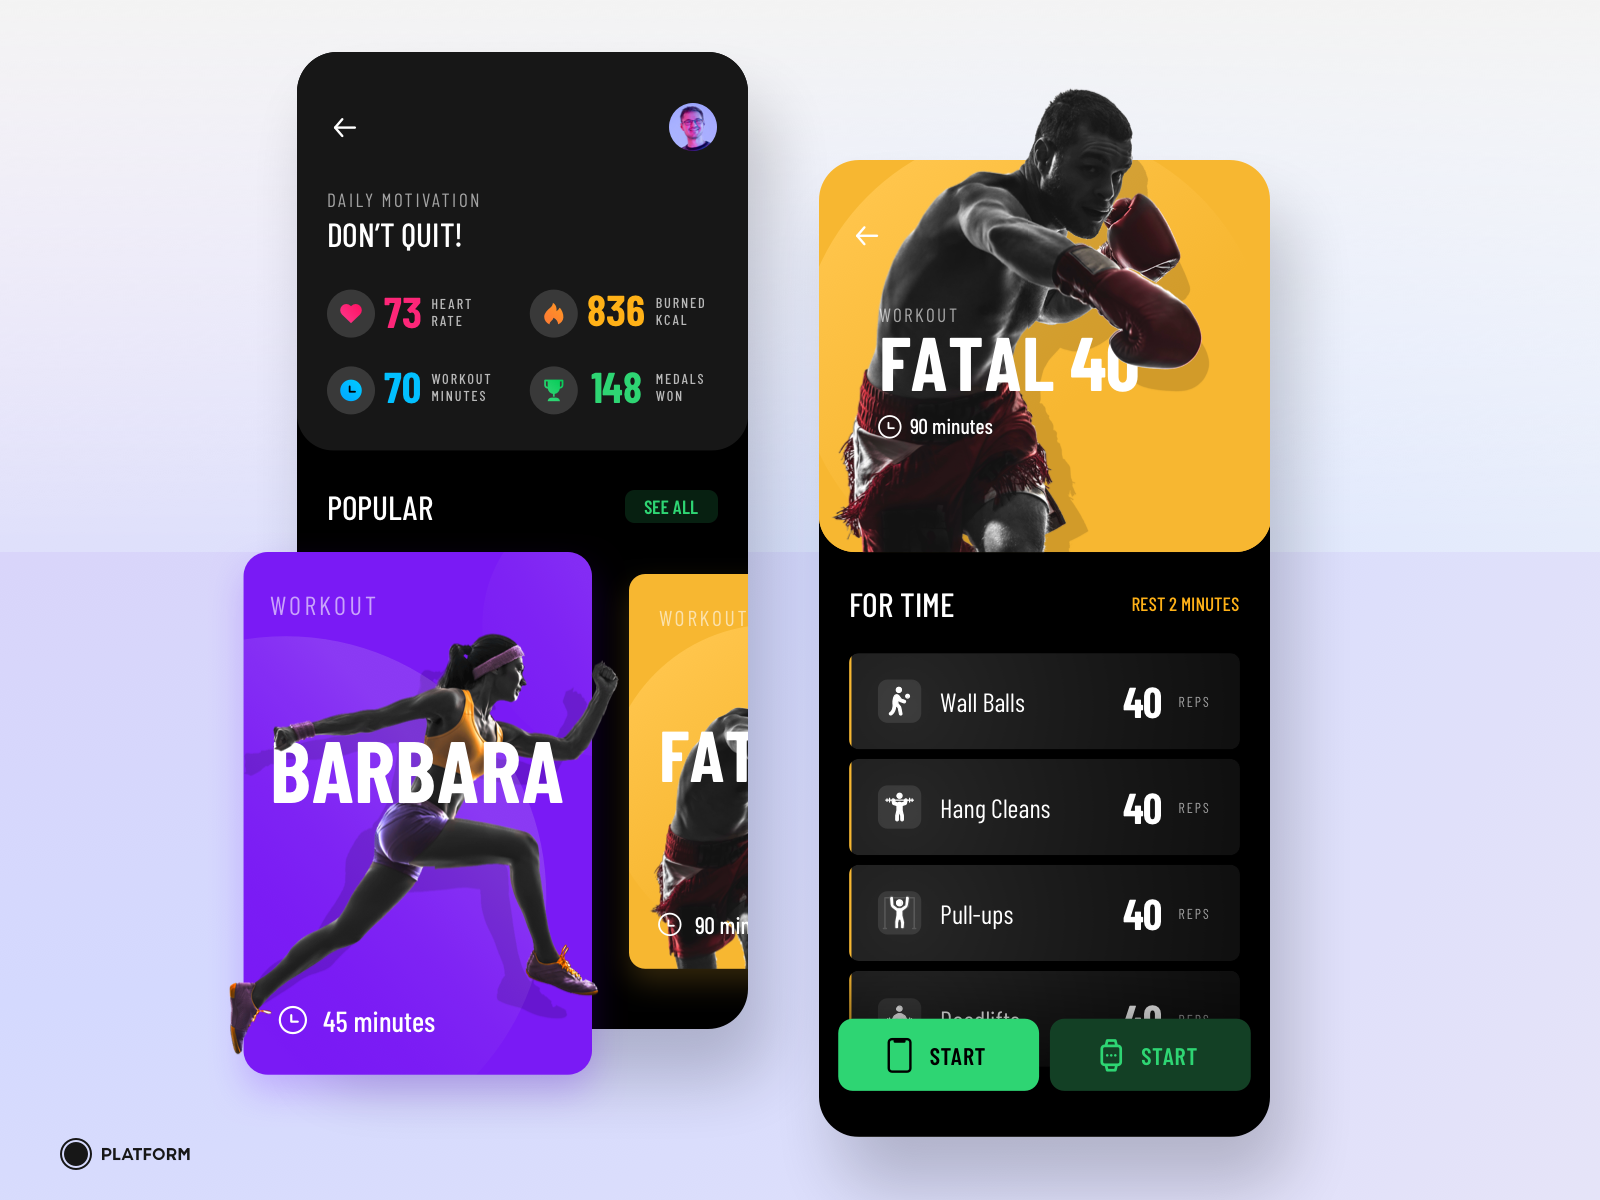 Fitness App by Andrej Roman for PLATFORM on Dribbble